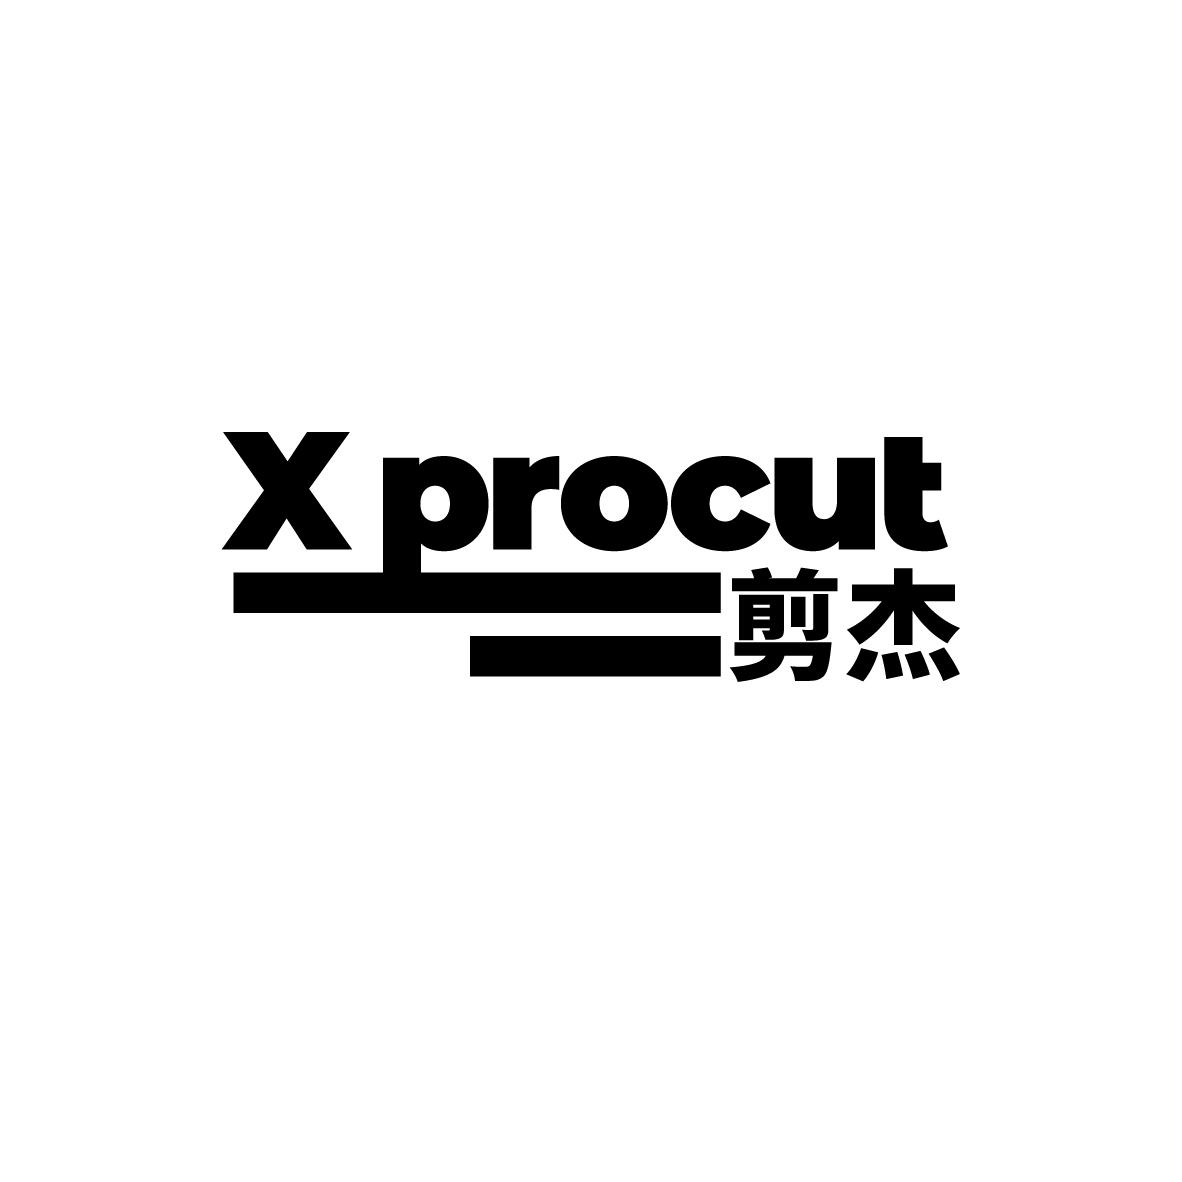   X PROCUT